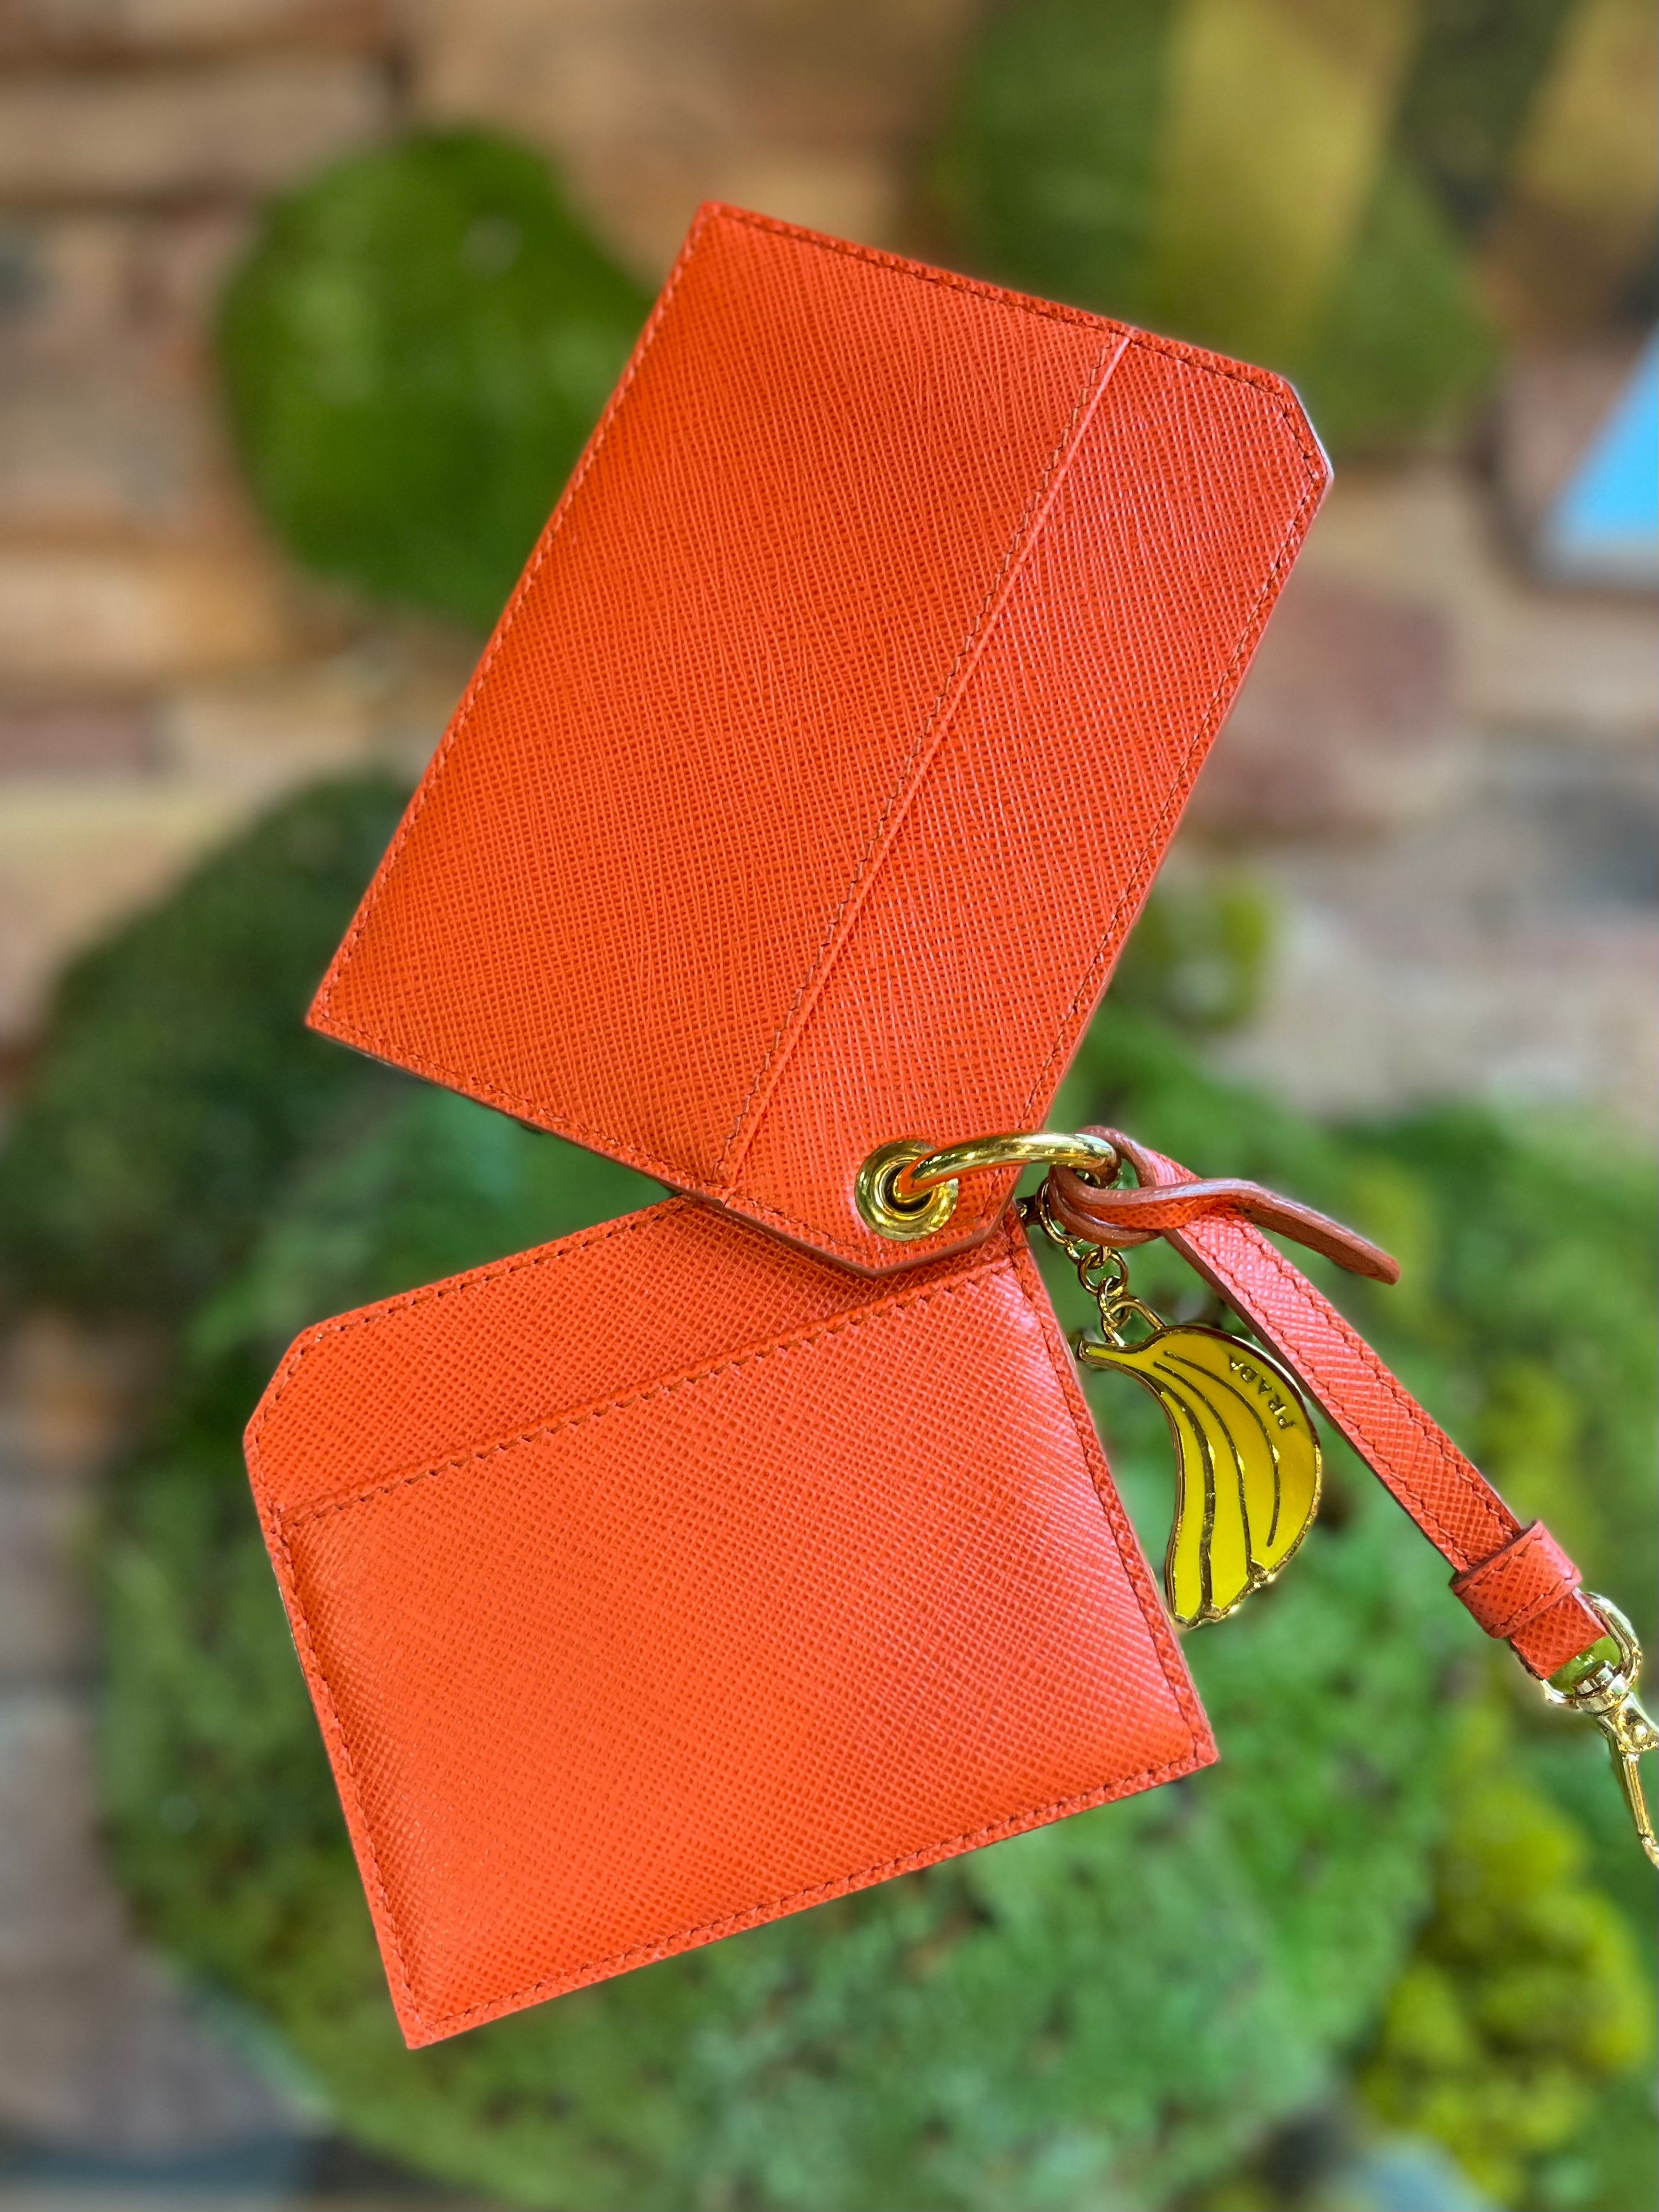 PRADA Orange Saffiano Leather Wallet Key Chain - The Purse Ladies